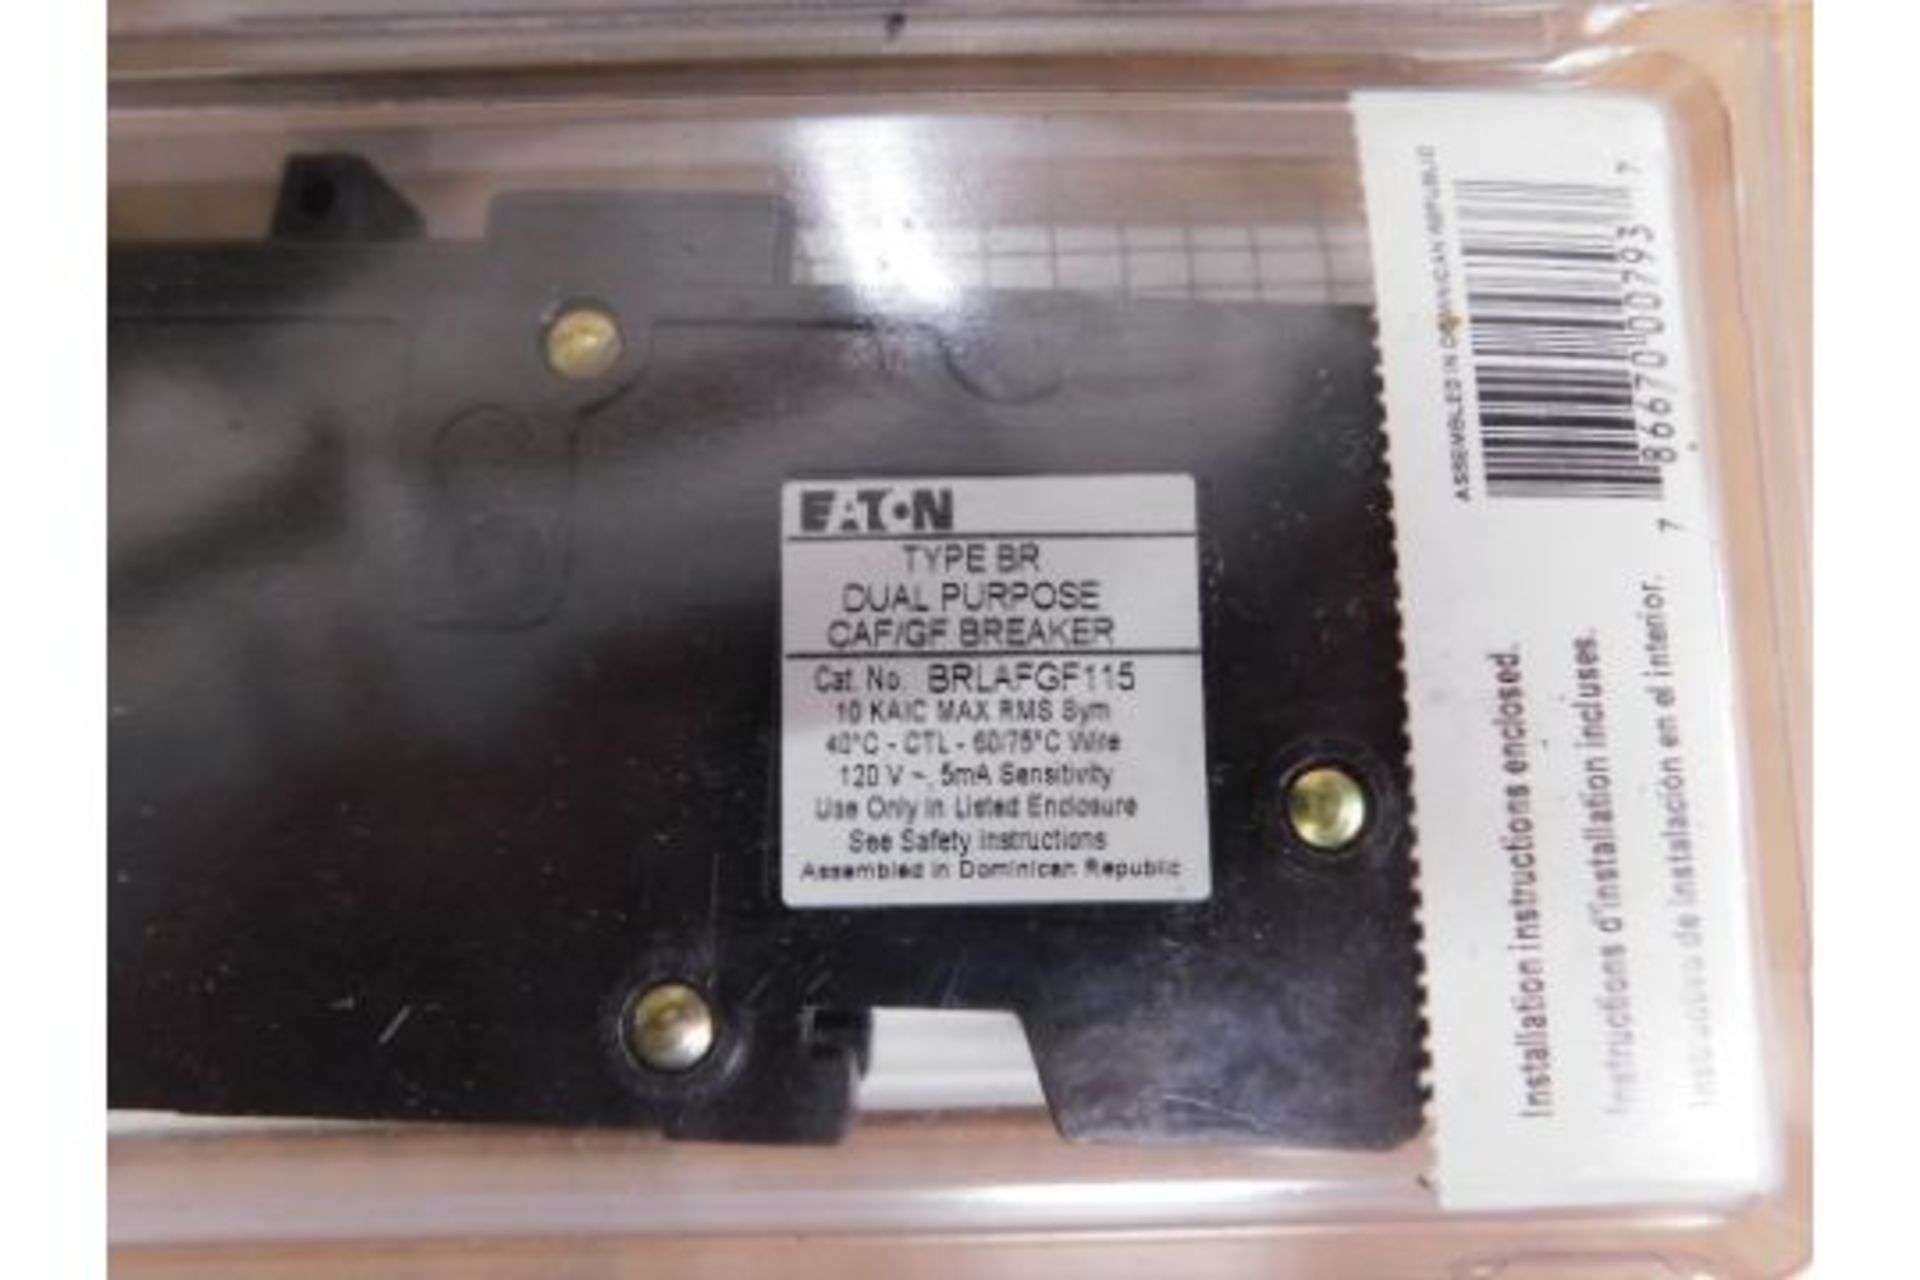 10x Eaton BRLAFGF115CS Miniature Circuit Breakers (MCBs) BR 1P 15A 240V 50/60Hz 1Ph - Image 6 of 6